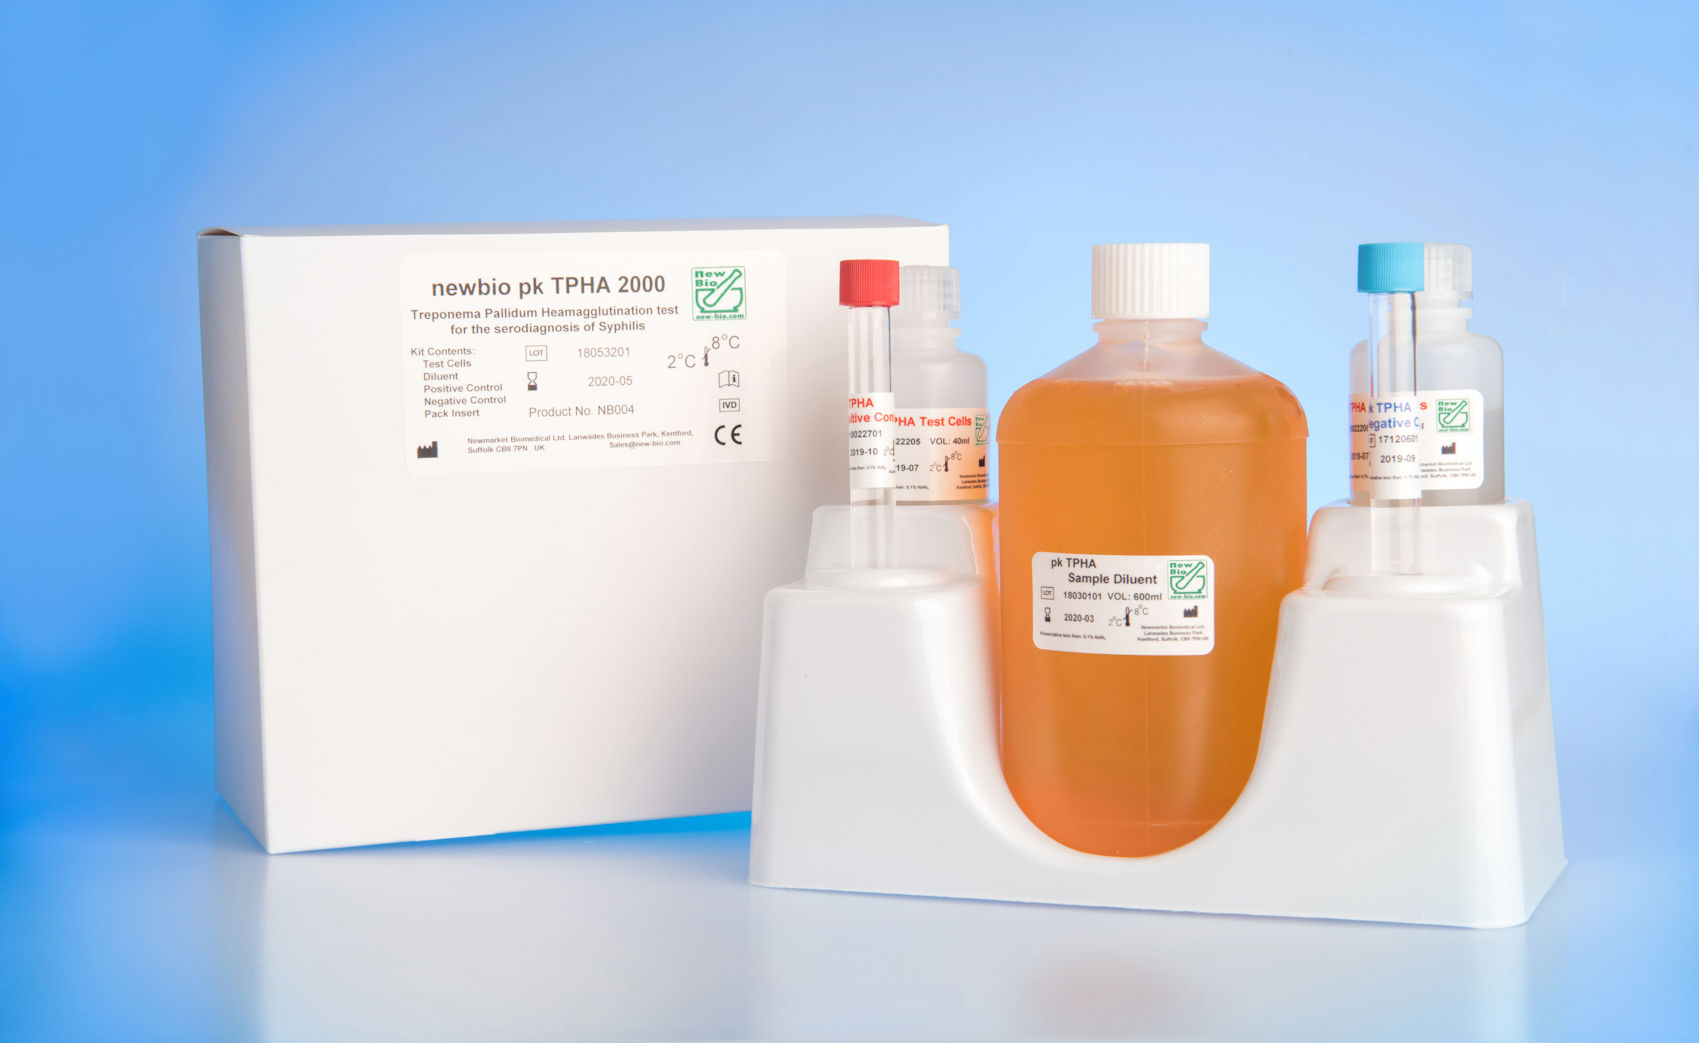 NewBio pk TPHA 2000 Test Kit - Treponema Pallidum Haemagglutination Test for the serodiagnosis of Syphilis